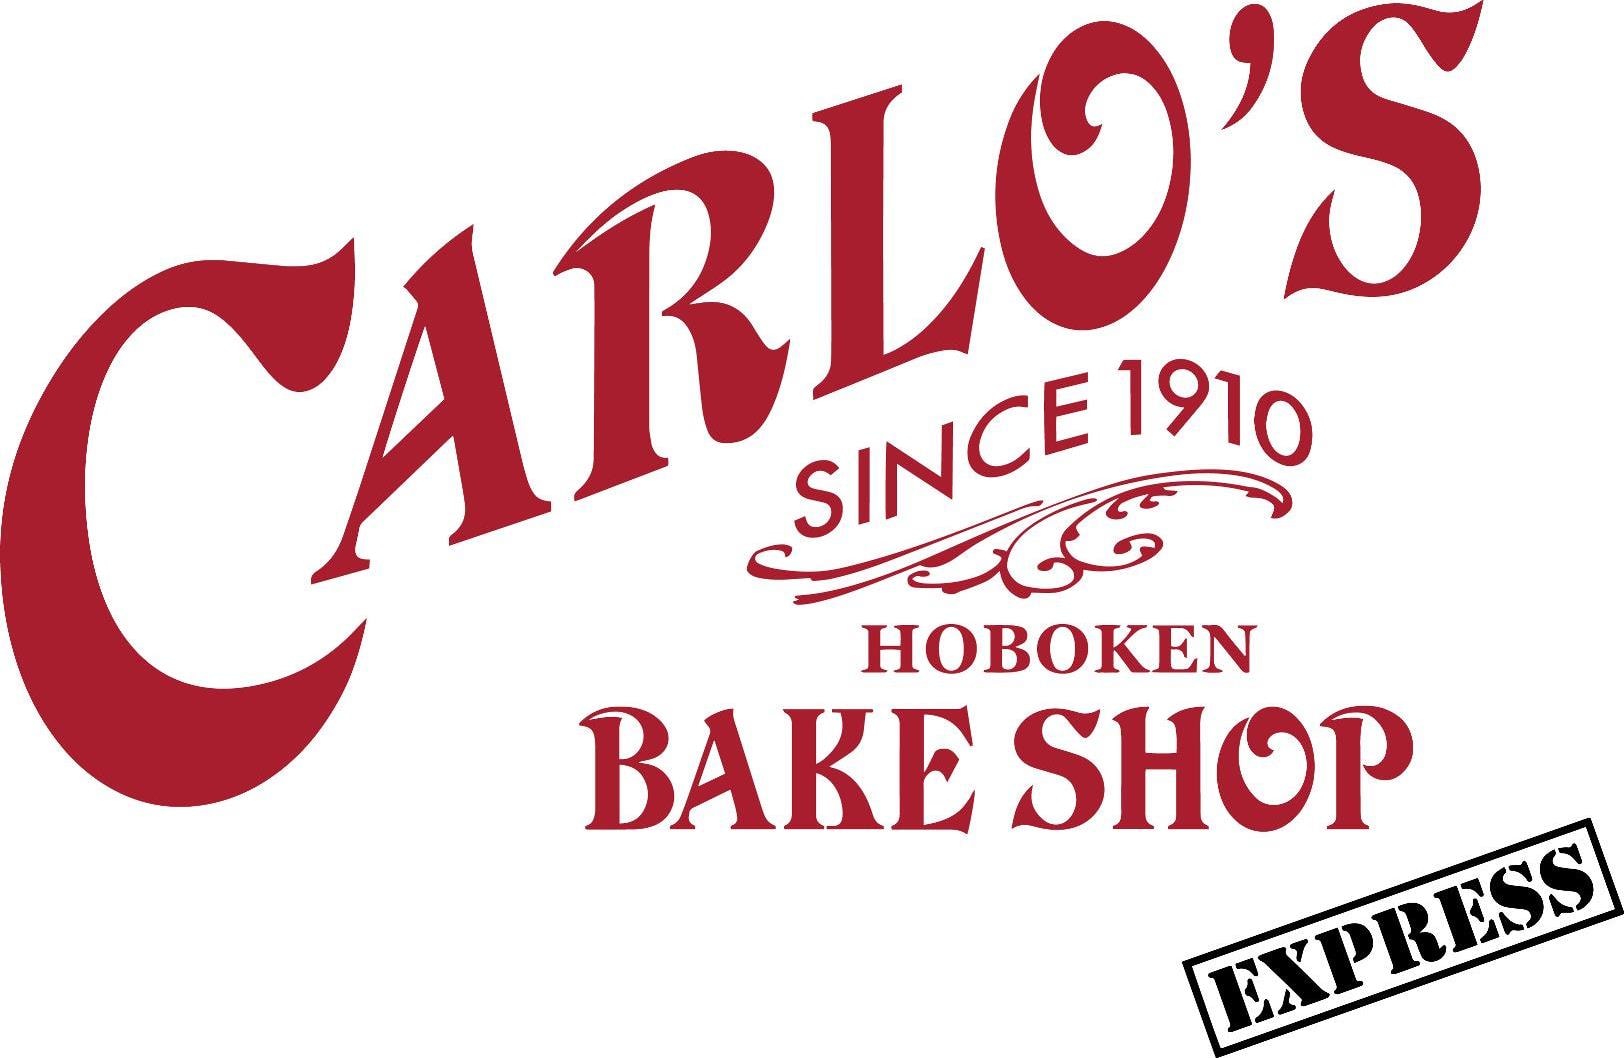 Carlo’s Bakery Cake ATM logo